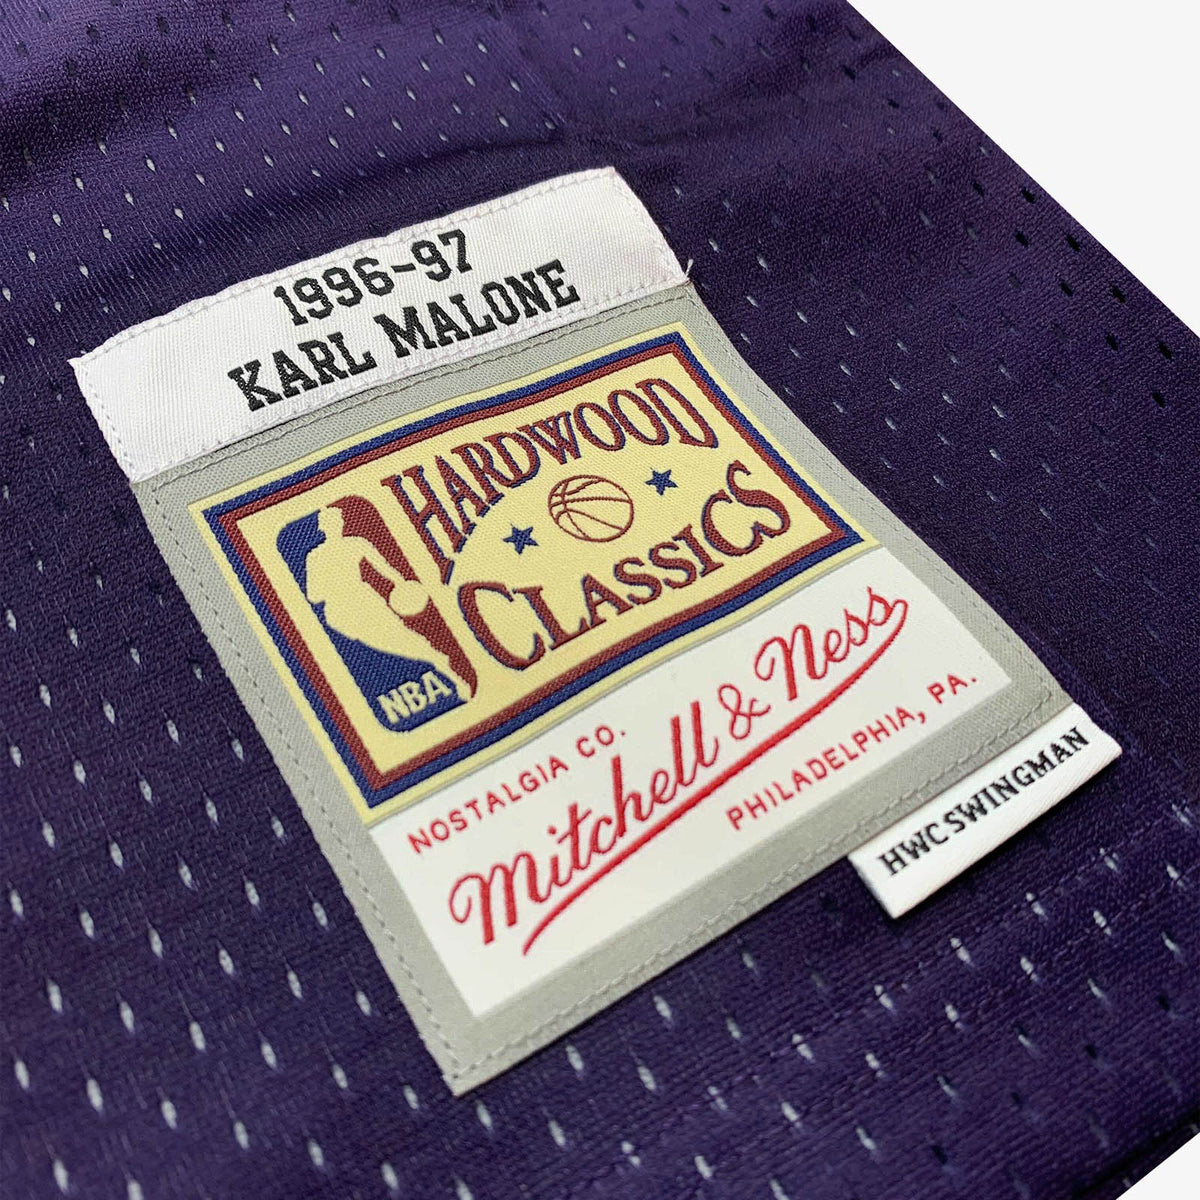 Shop Mitchell & Ness Utah Jazz Karl Malone 1996-1997 Swingman Jersey  SMJYGS18216-UJAPURP96KMA purple